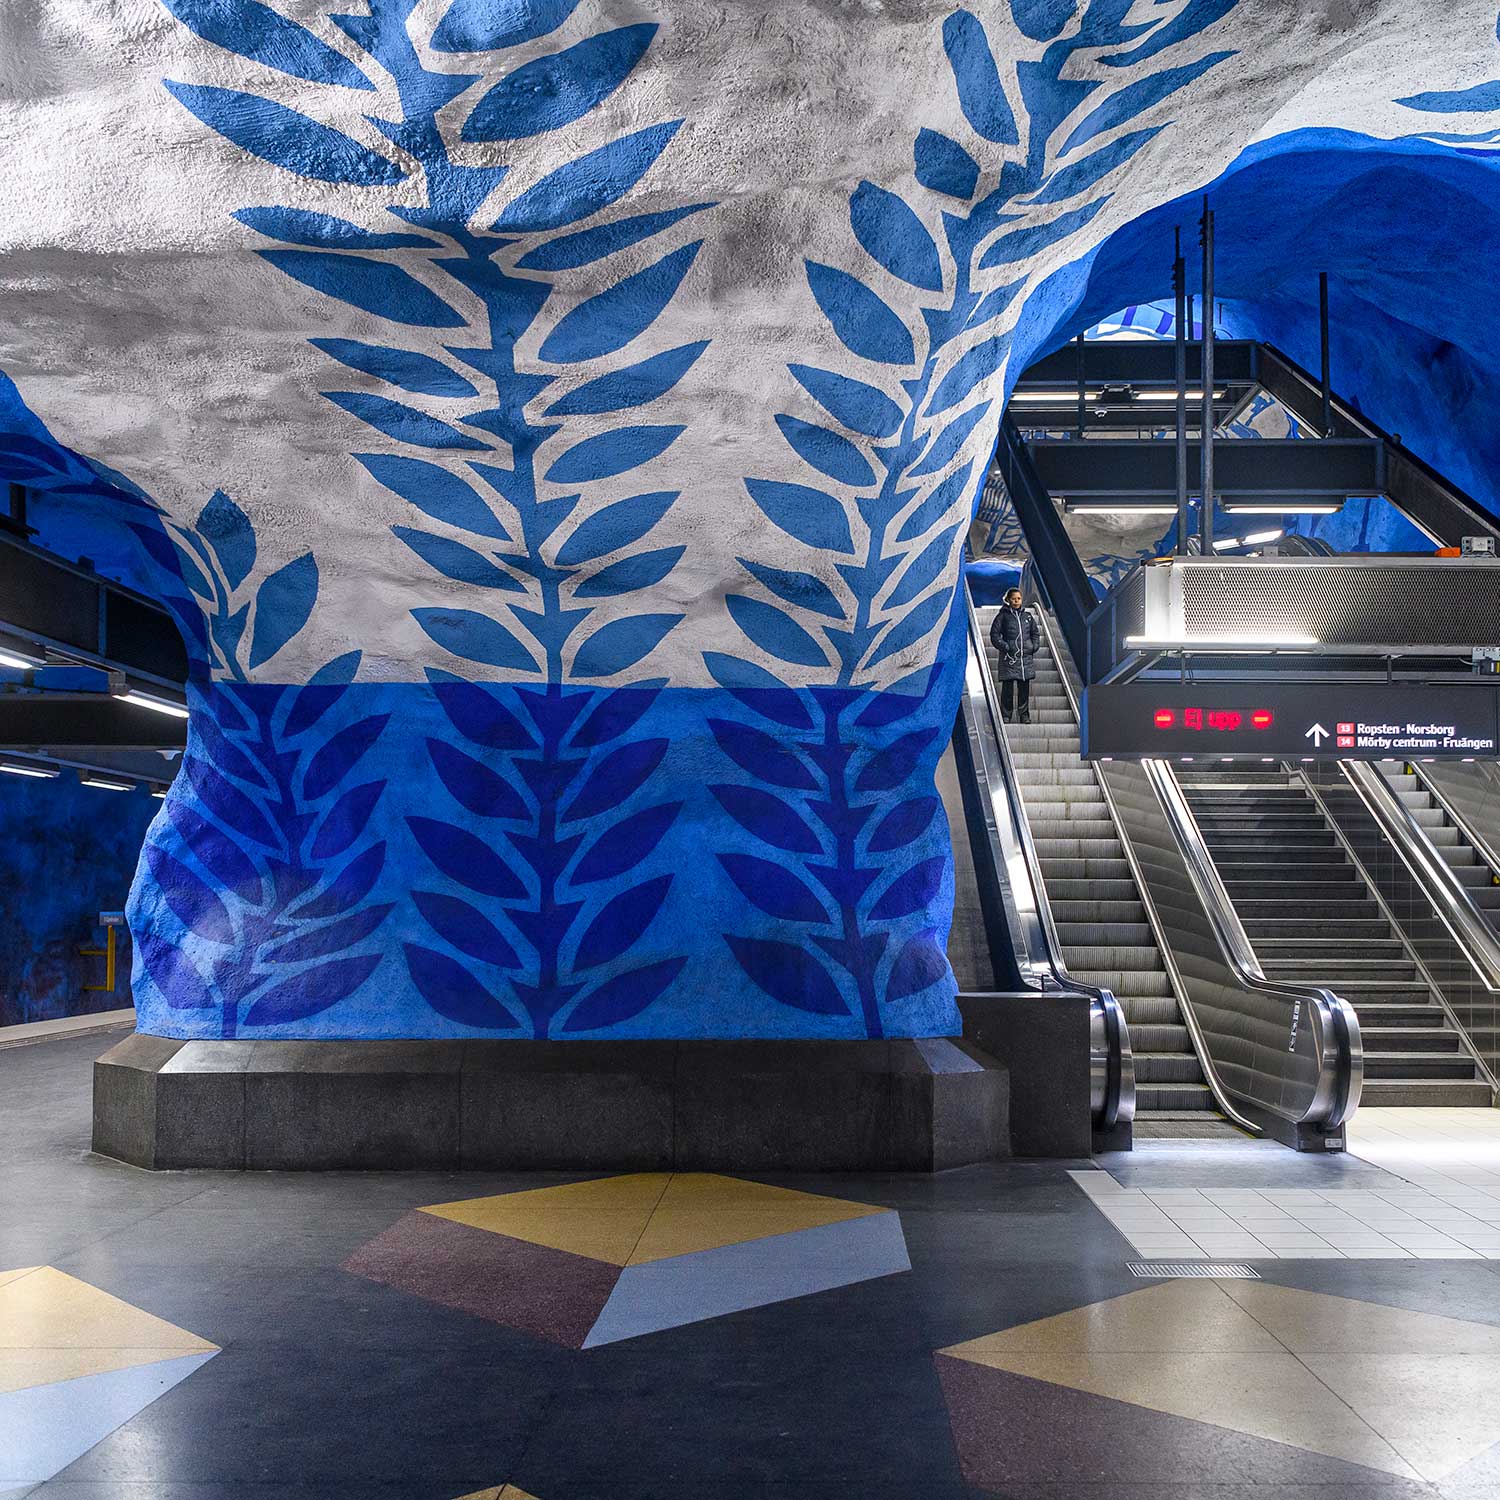 Transport Shots at T-Centralen Underground Station, Stockholm 220302wc850457-2